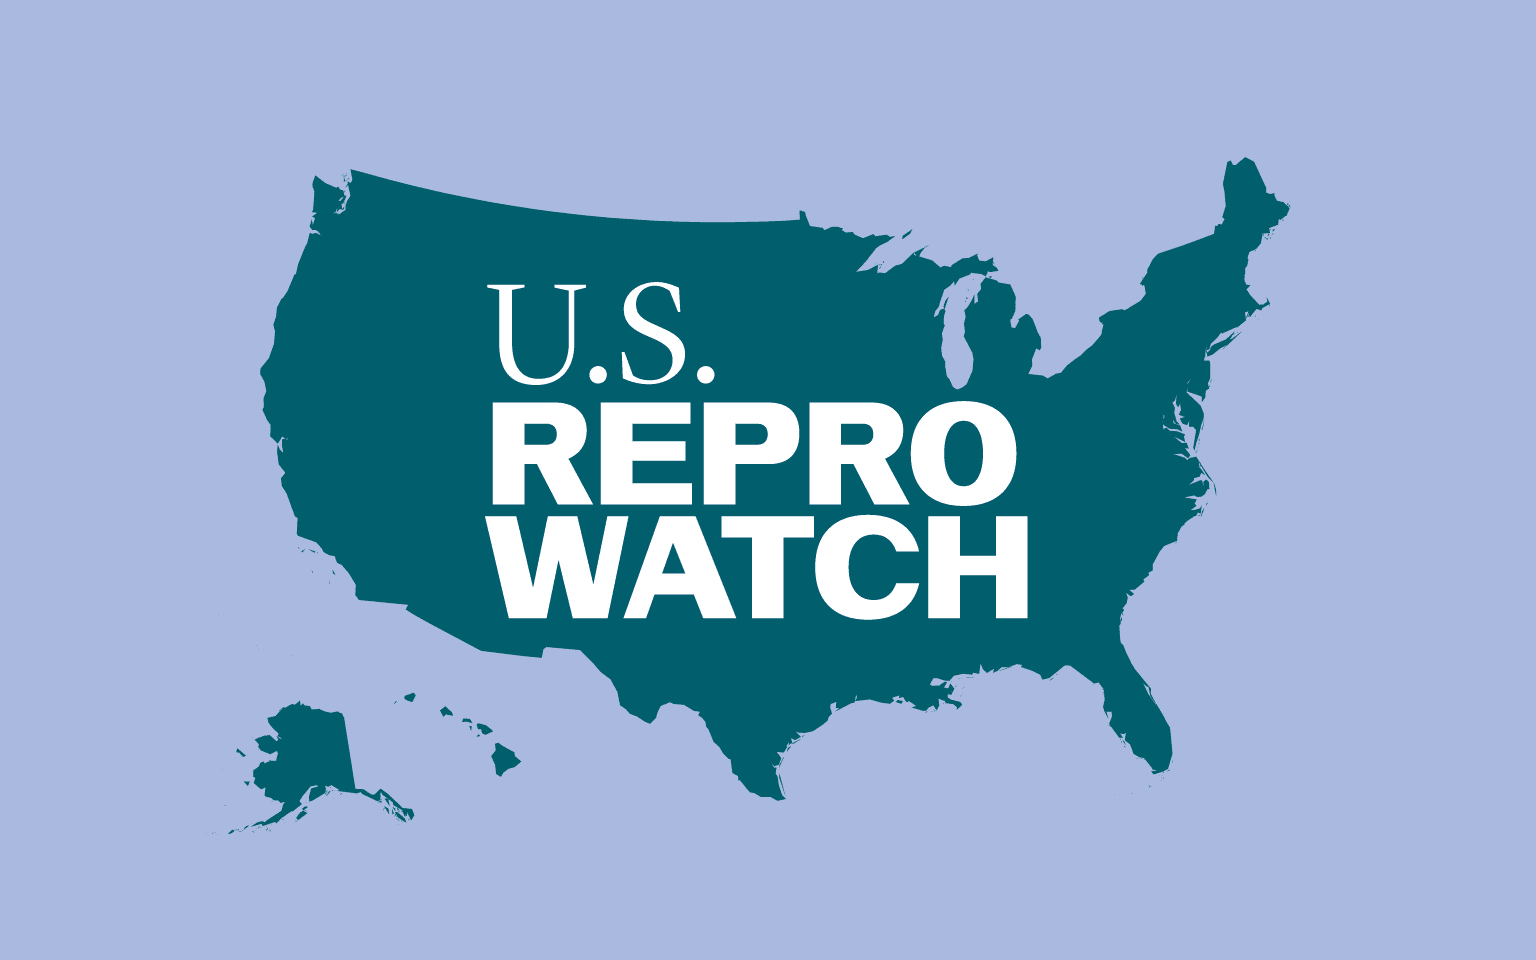 U.S. Repro Watch